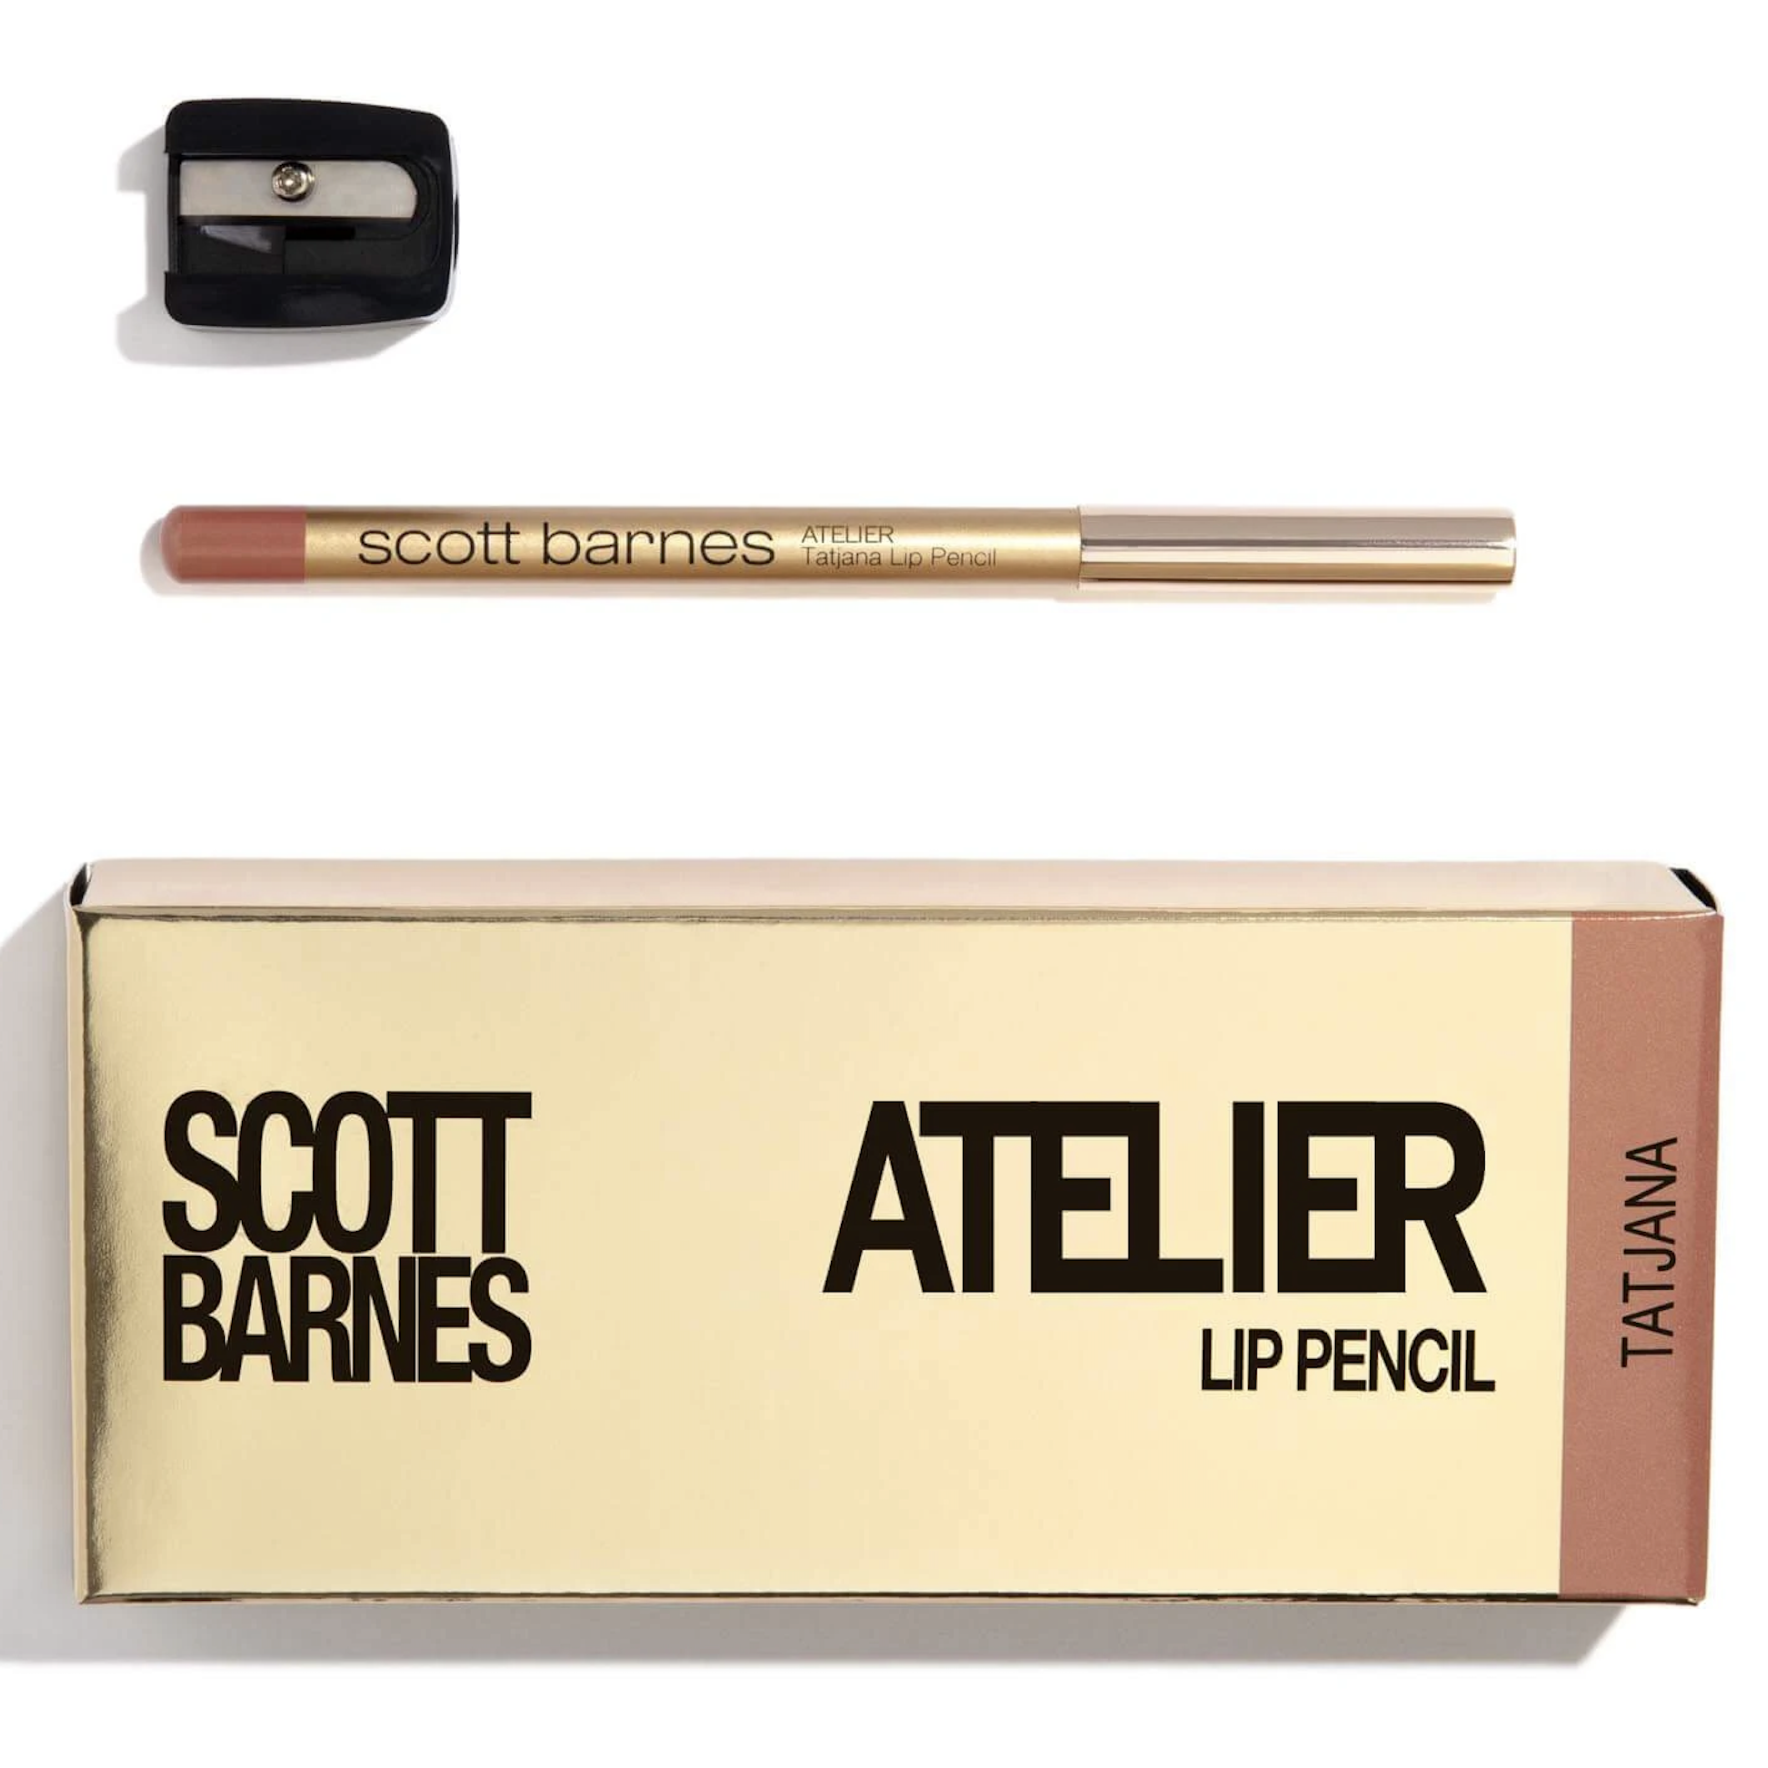 Scott Barnes Atelier Lip Liner - Tatjana with packaging